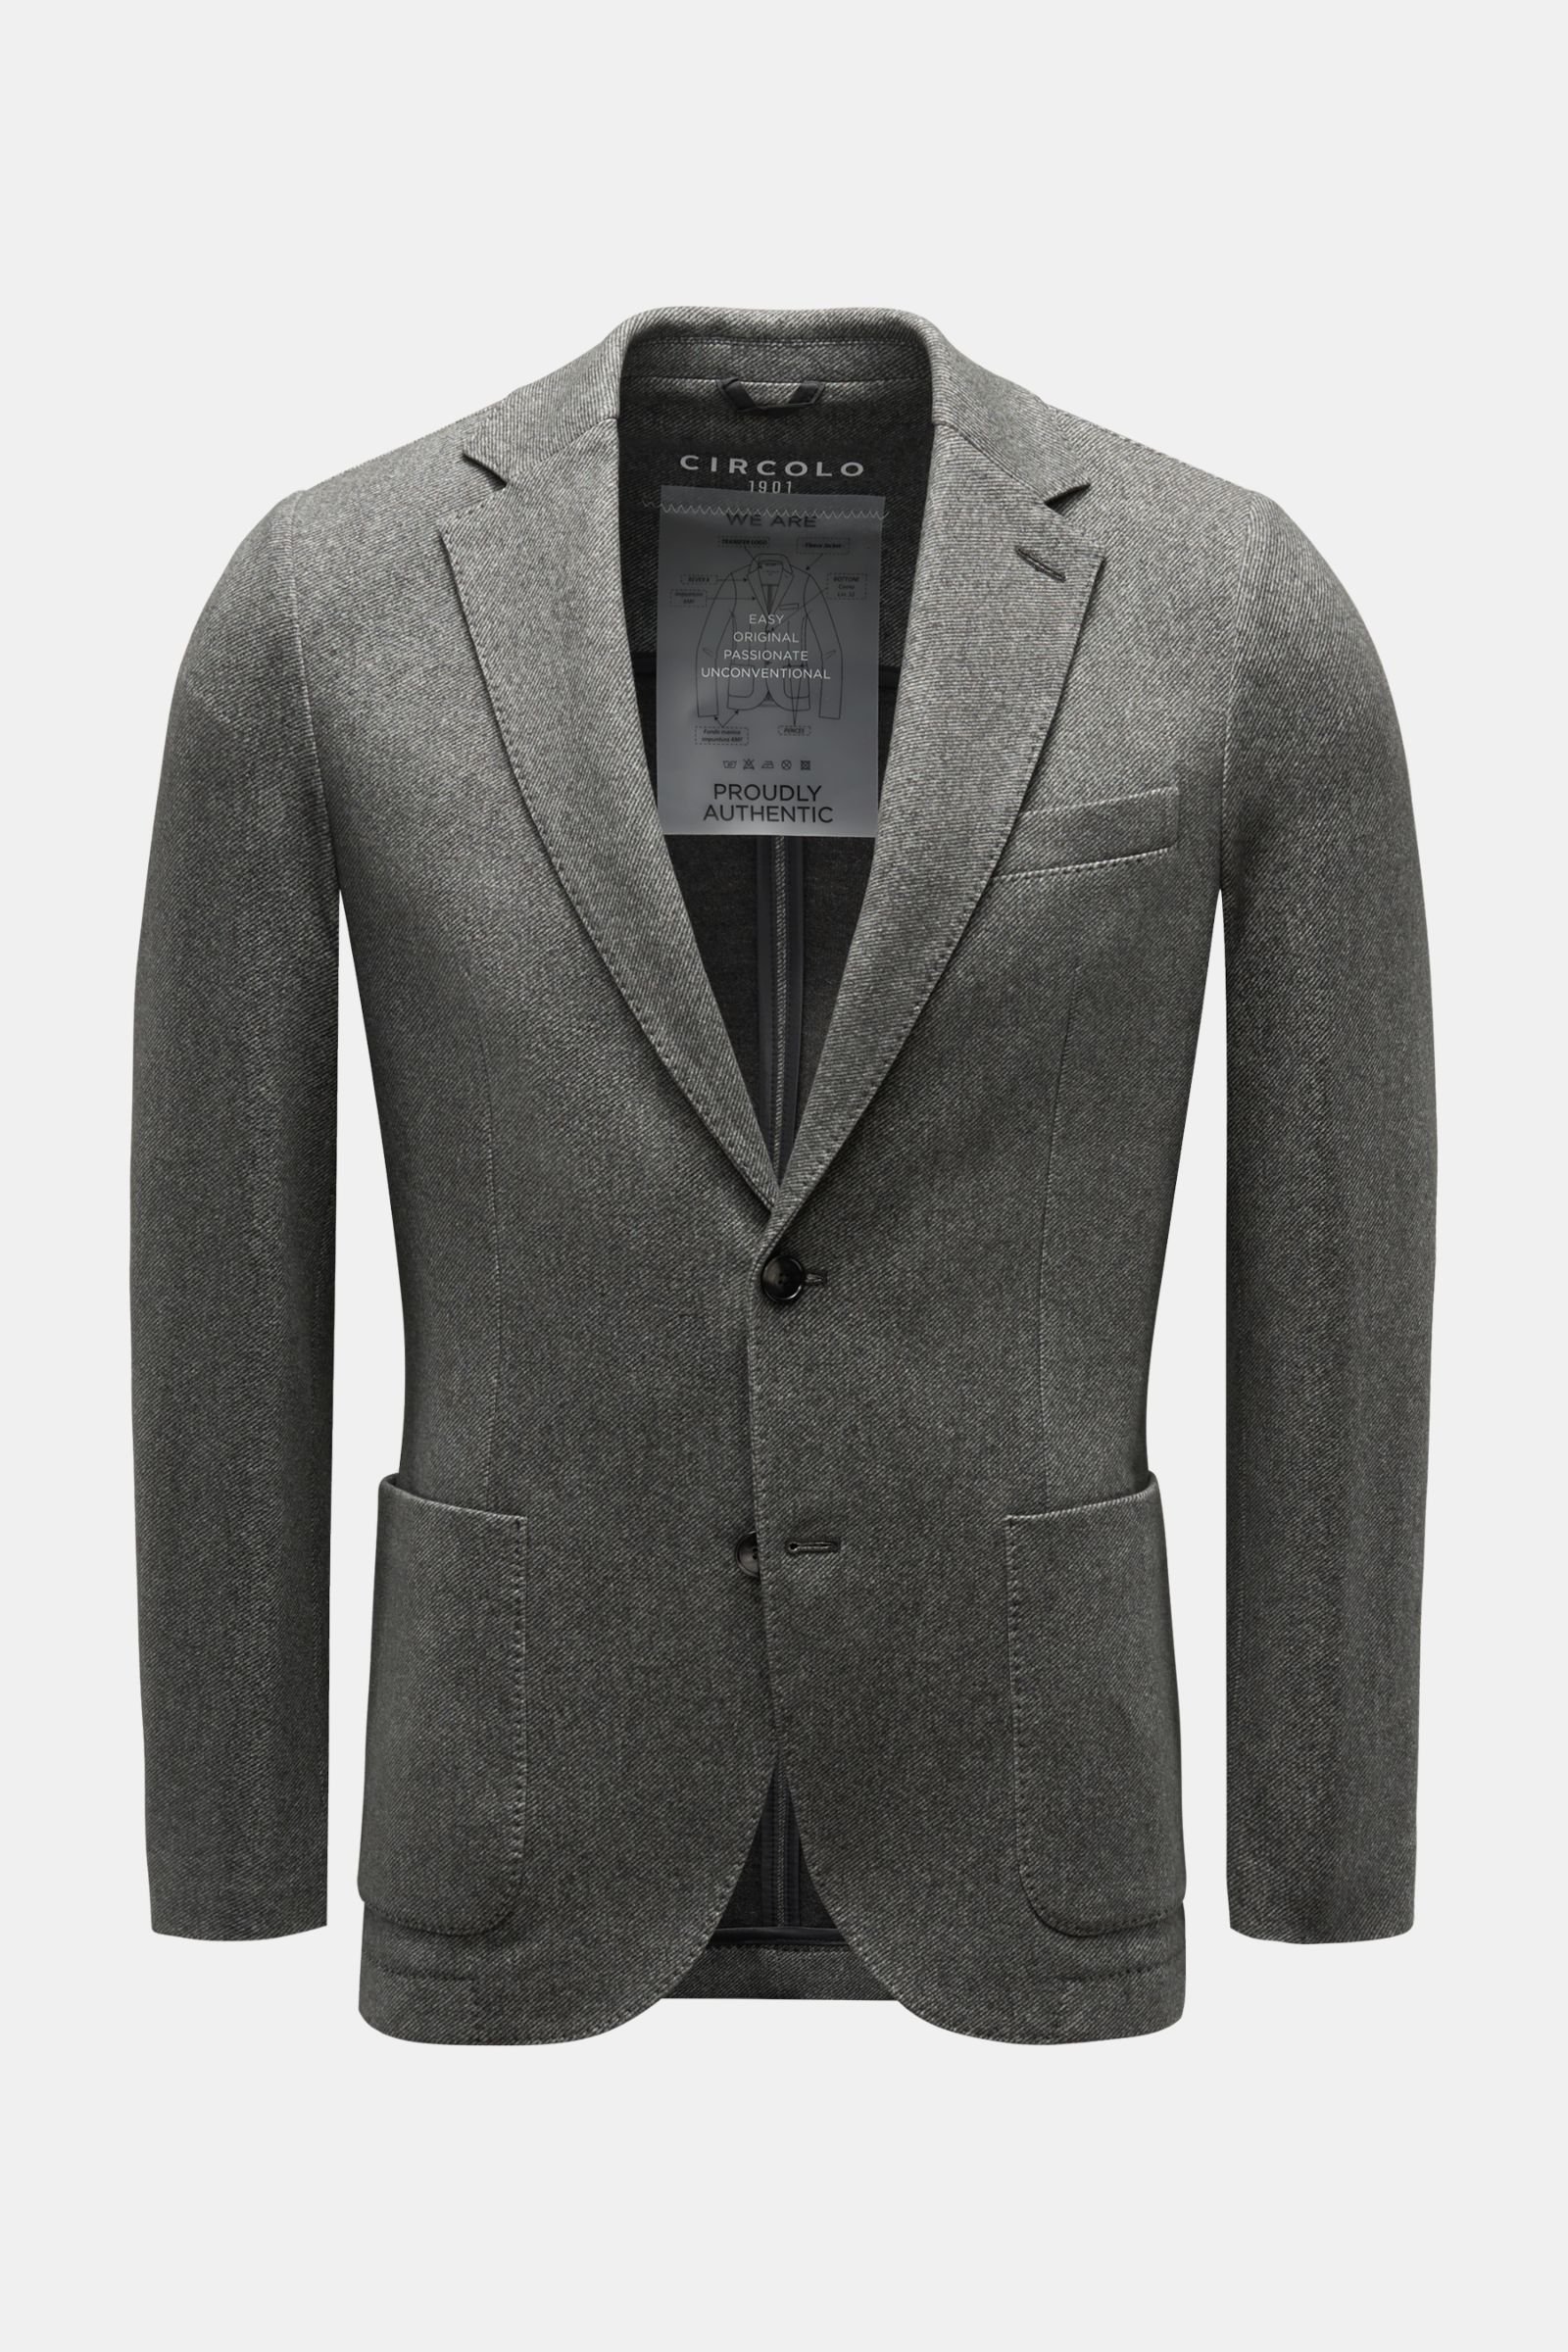 Jersey jacket dark grey patterned